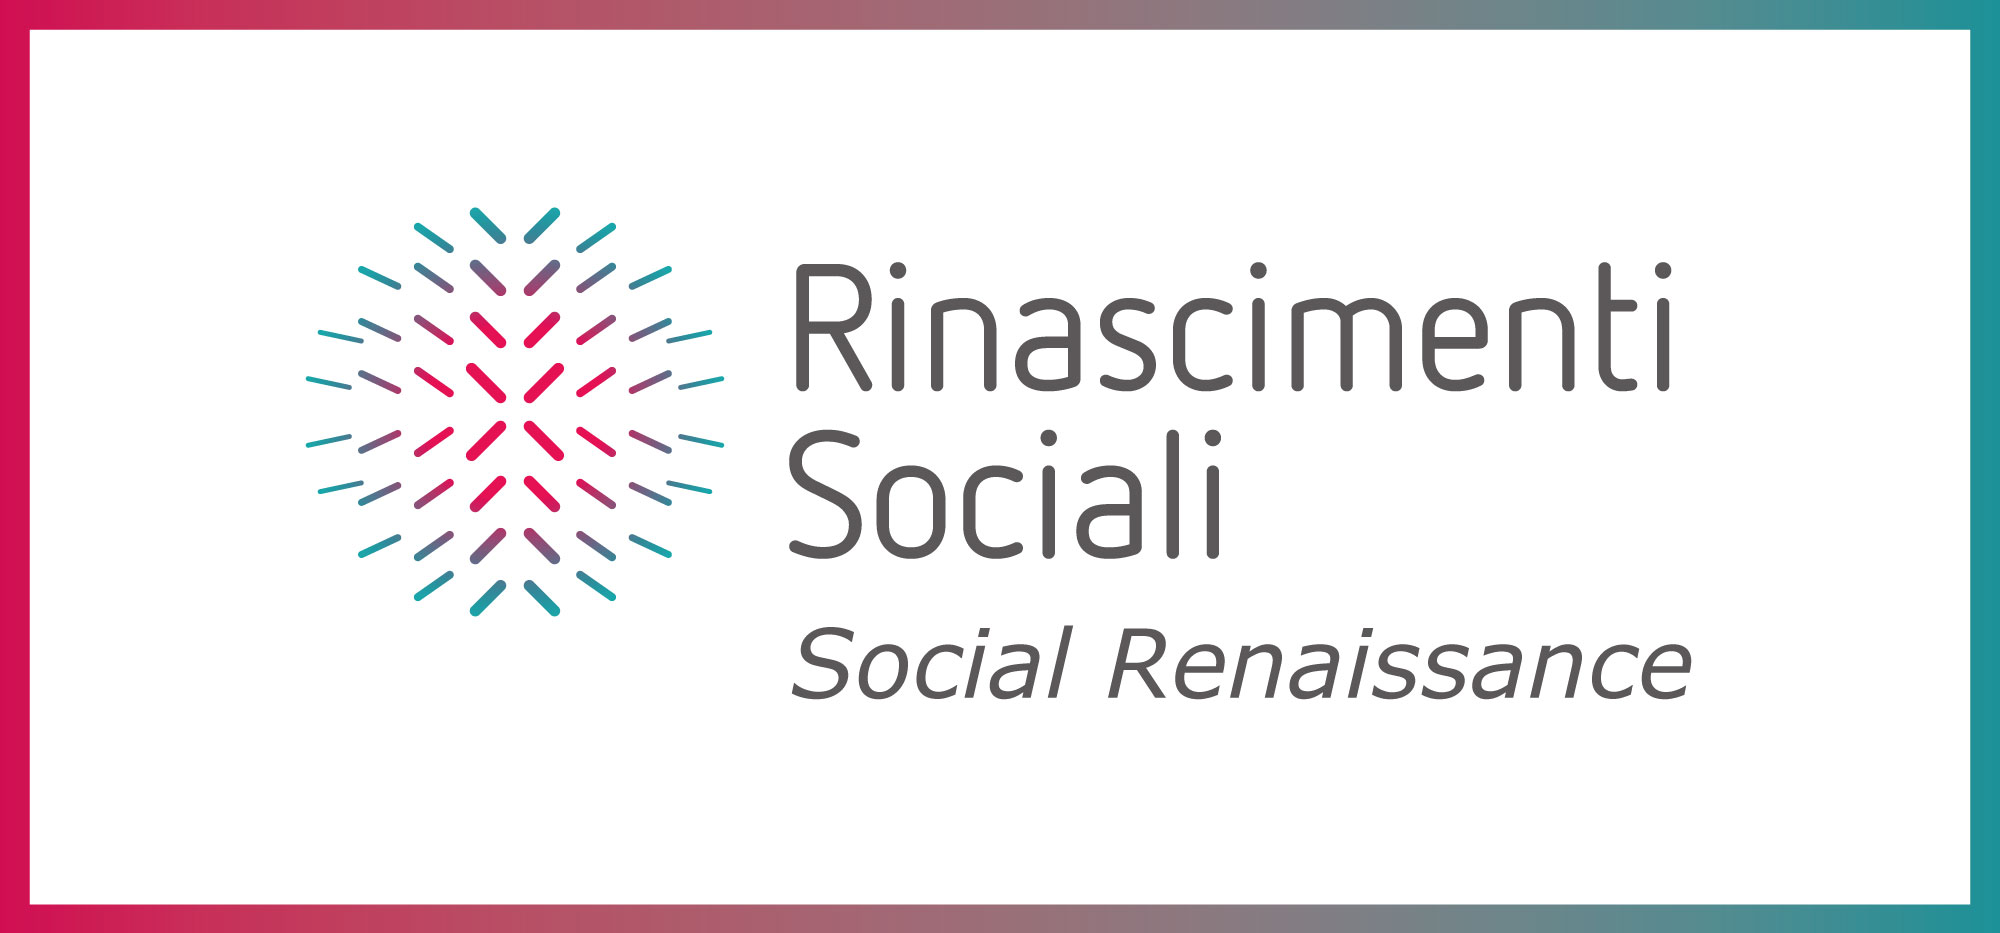 Social Renaissance